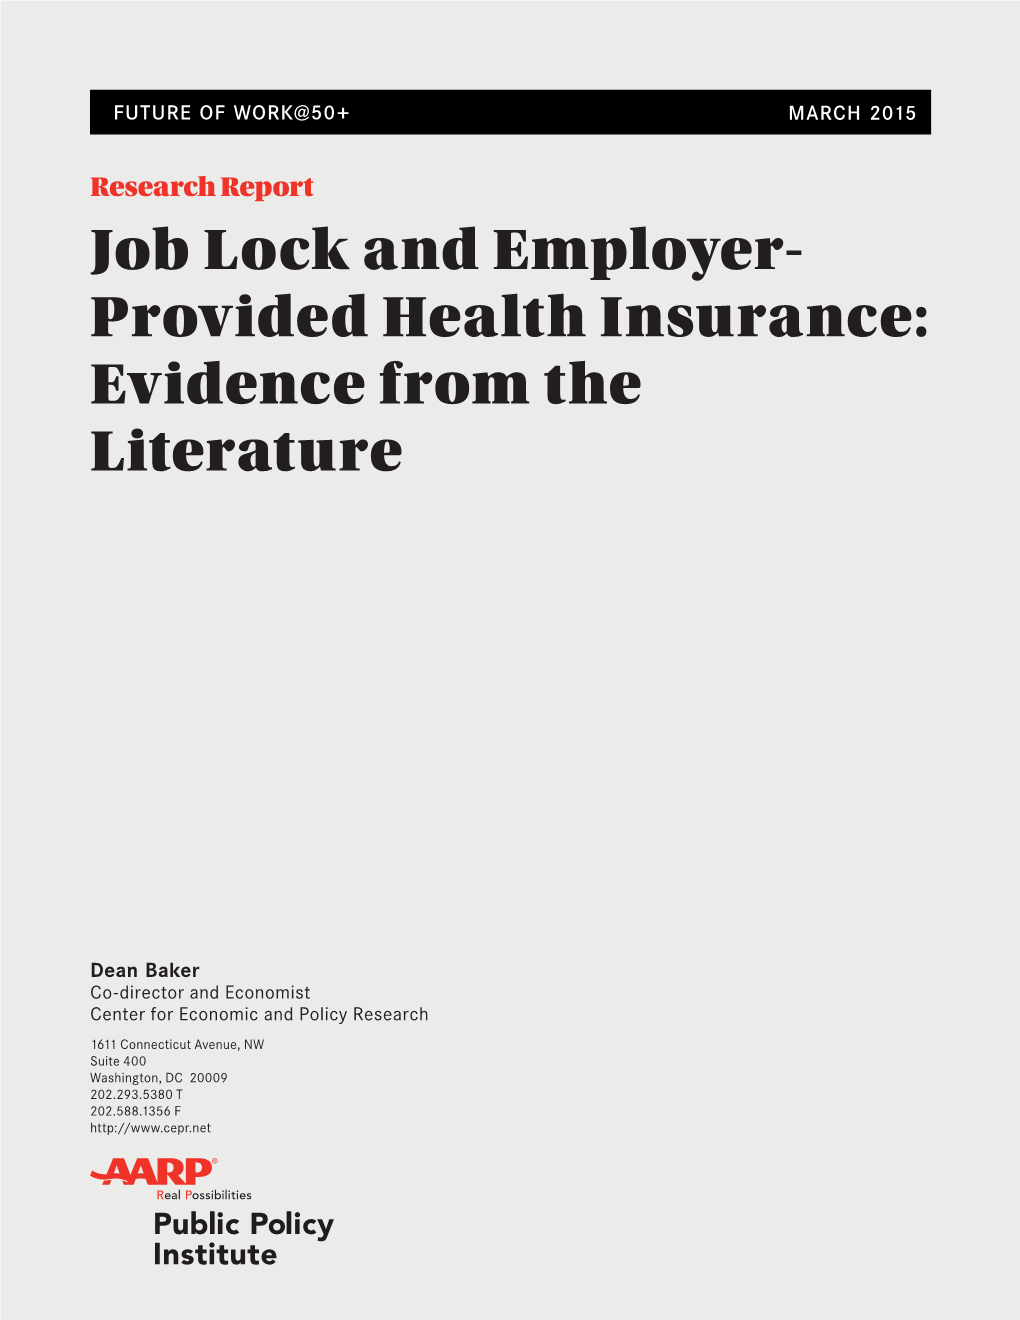 Job Lock and Employer-Provided Health Insurance